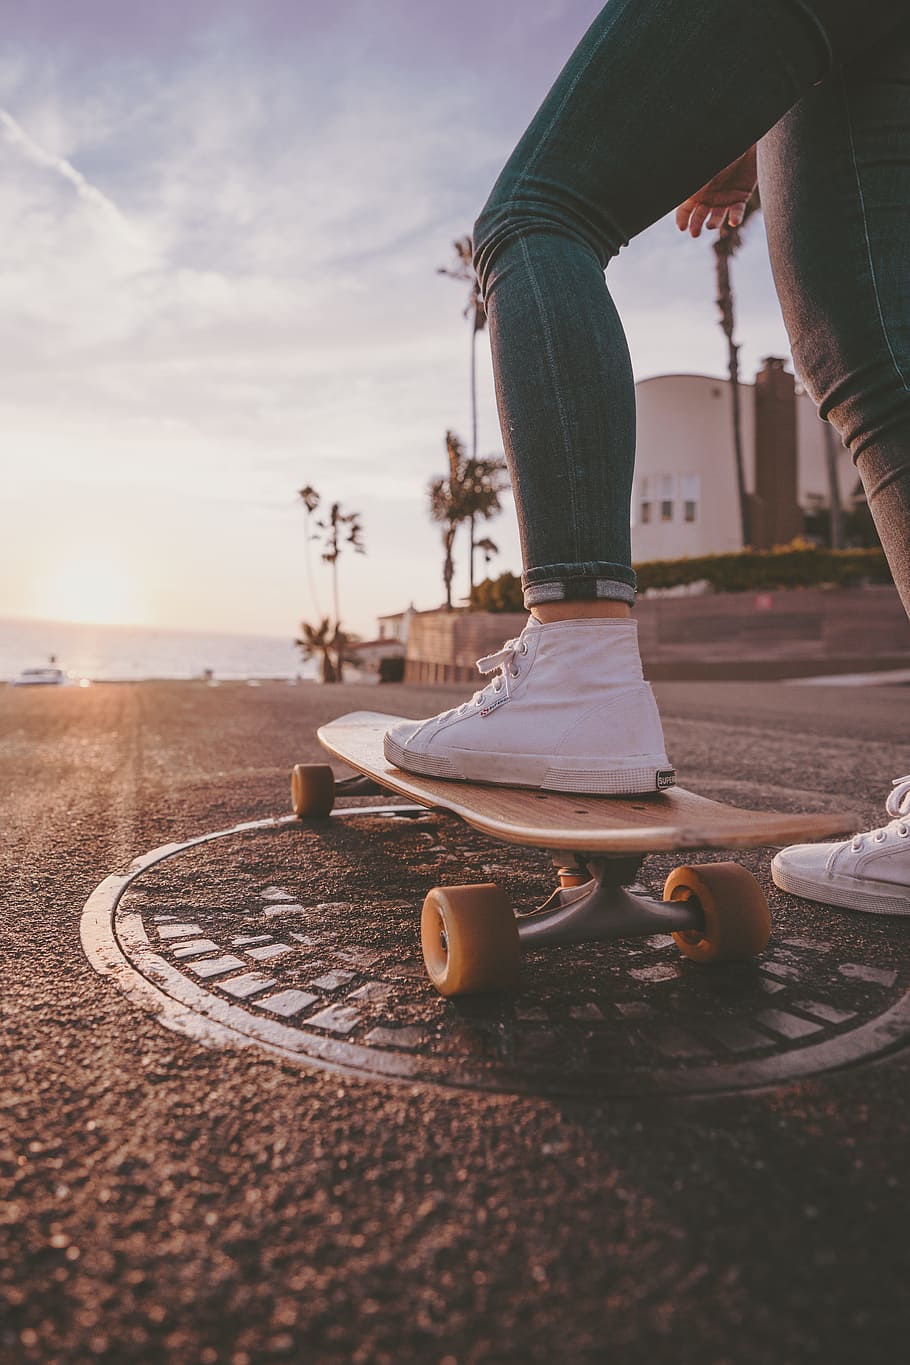 woman riding skateboard during daytime, palm tree, street, sunset